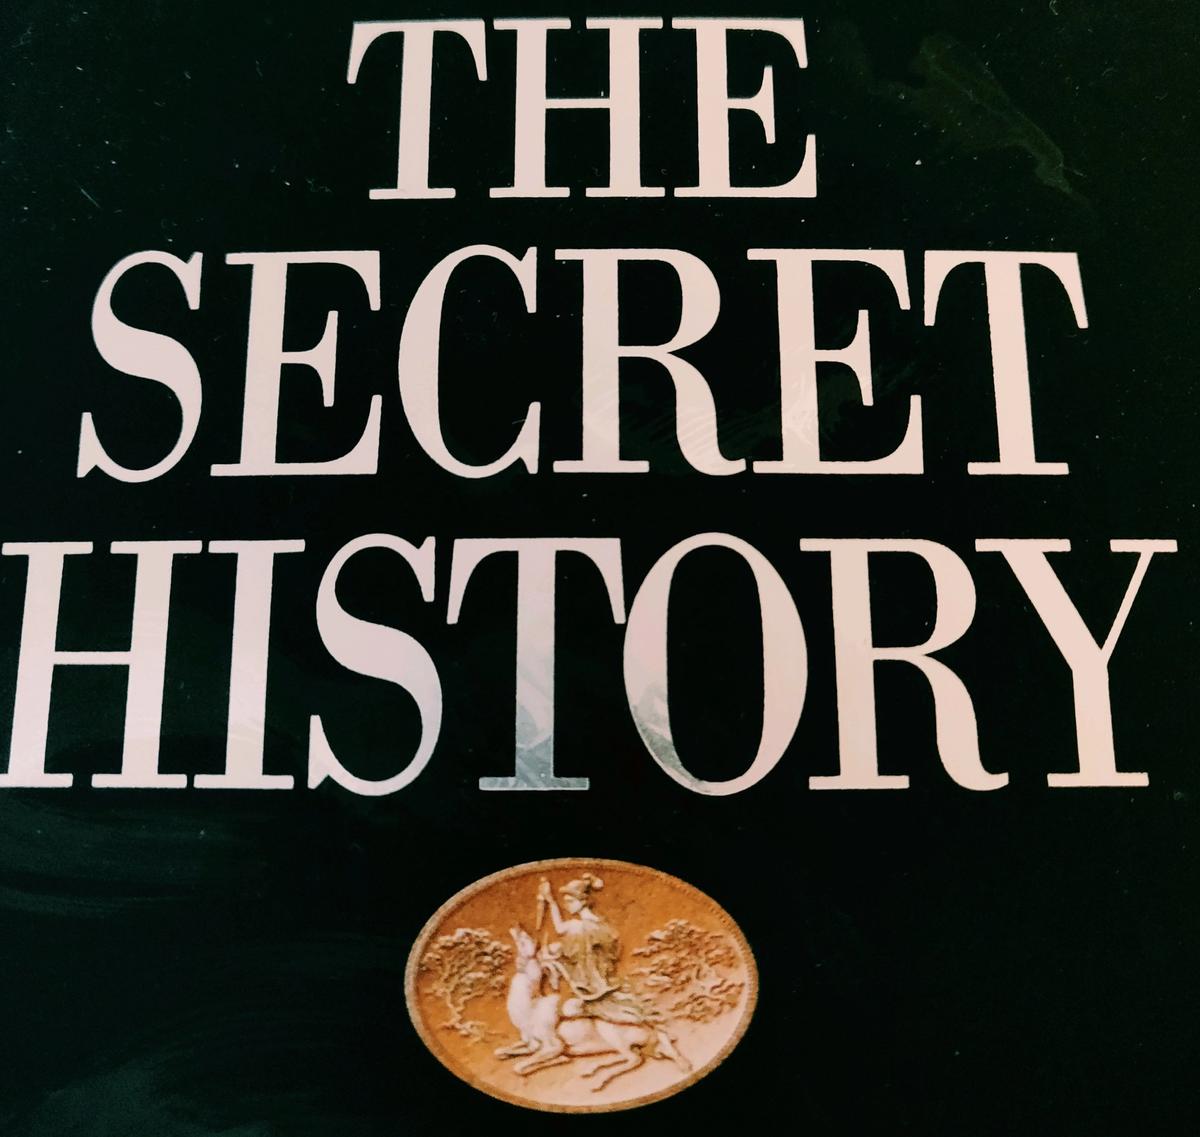 Review: The Secret History - Donna Tartt - The Literary Edit